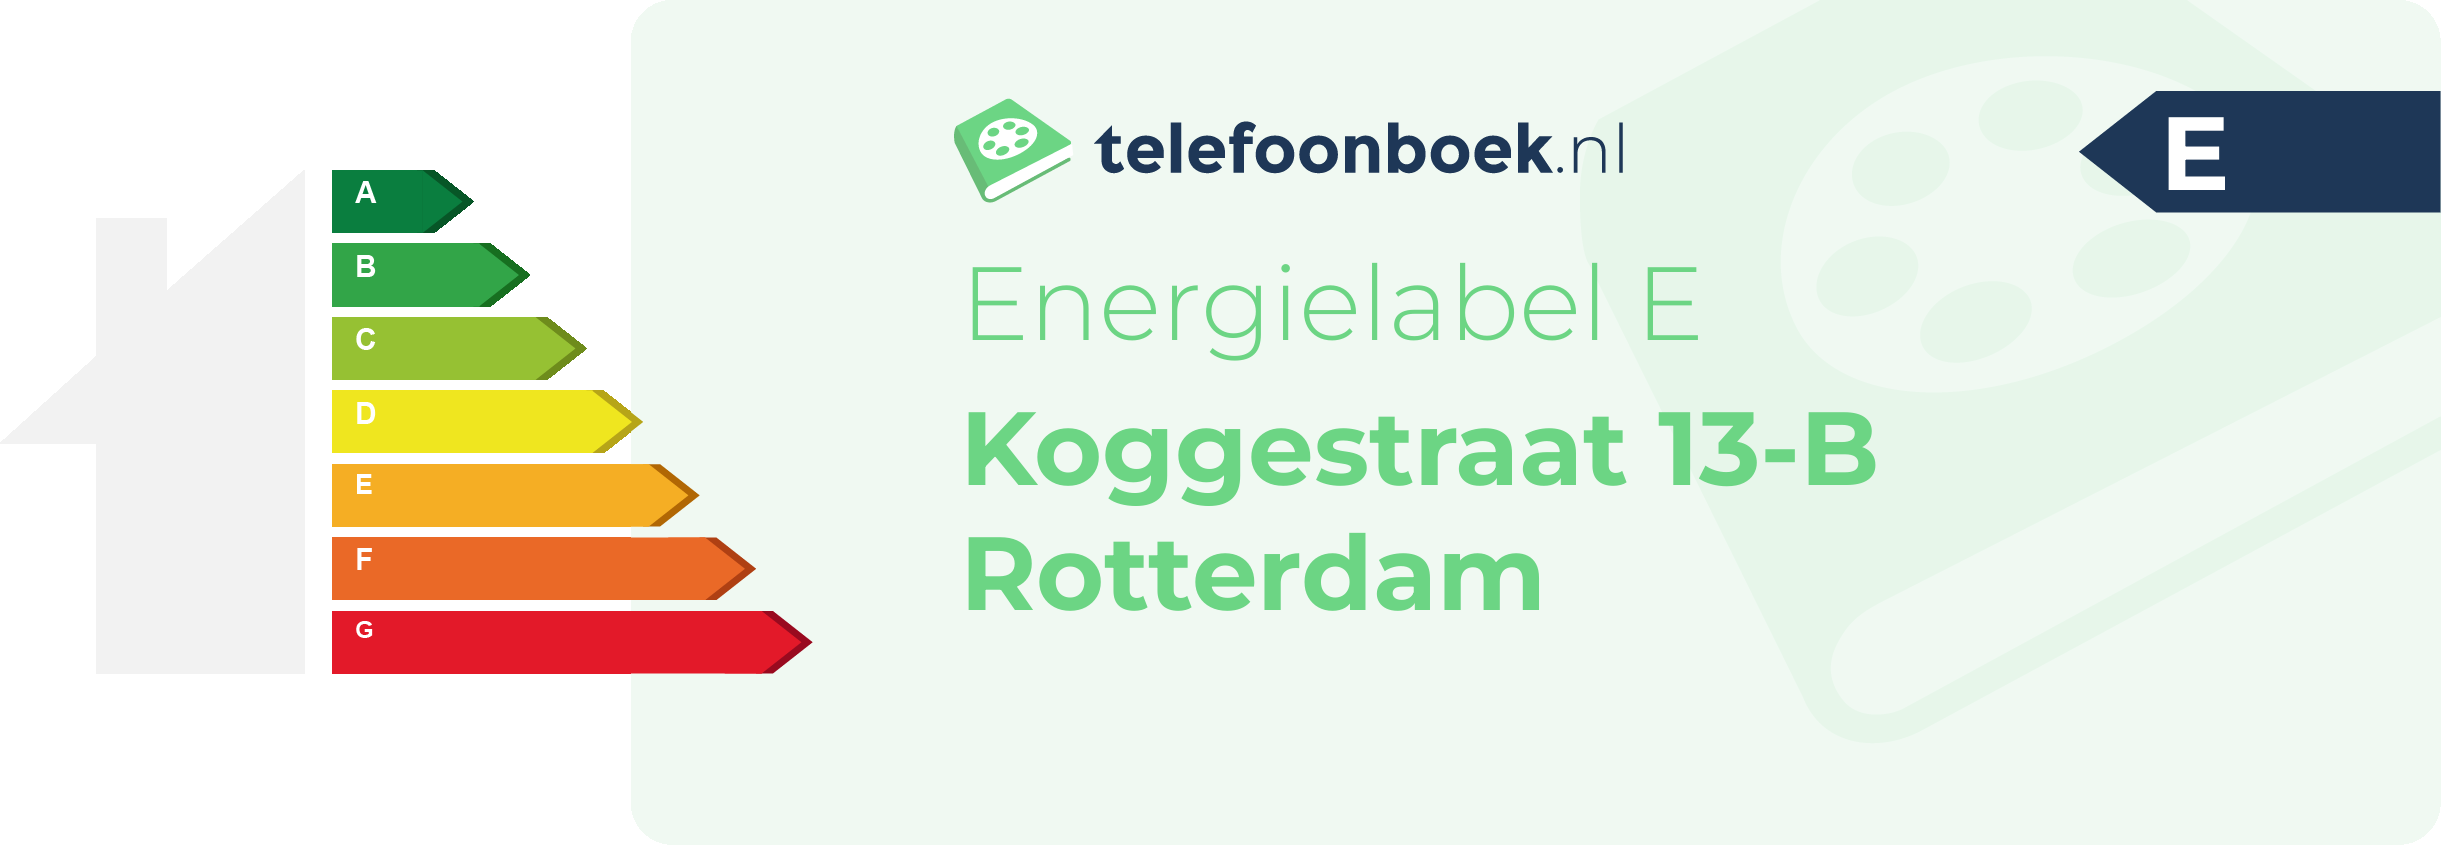 Energielabel Koggestraat 13-B Rotterdam